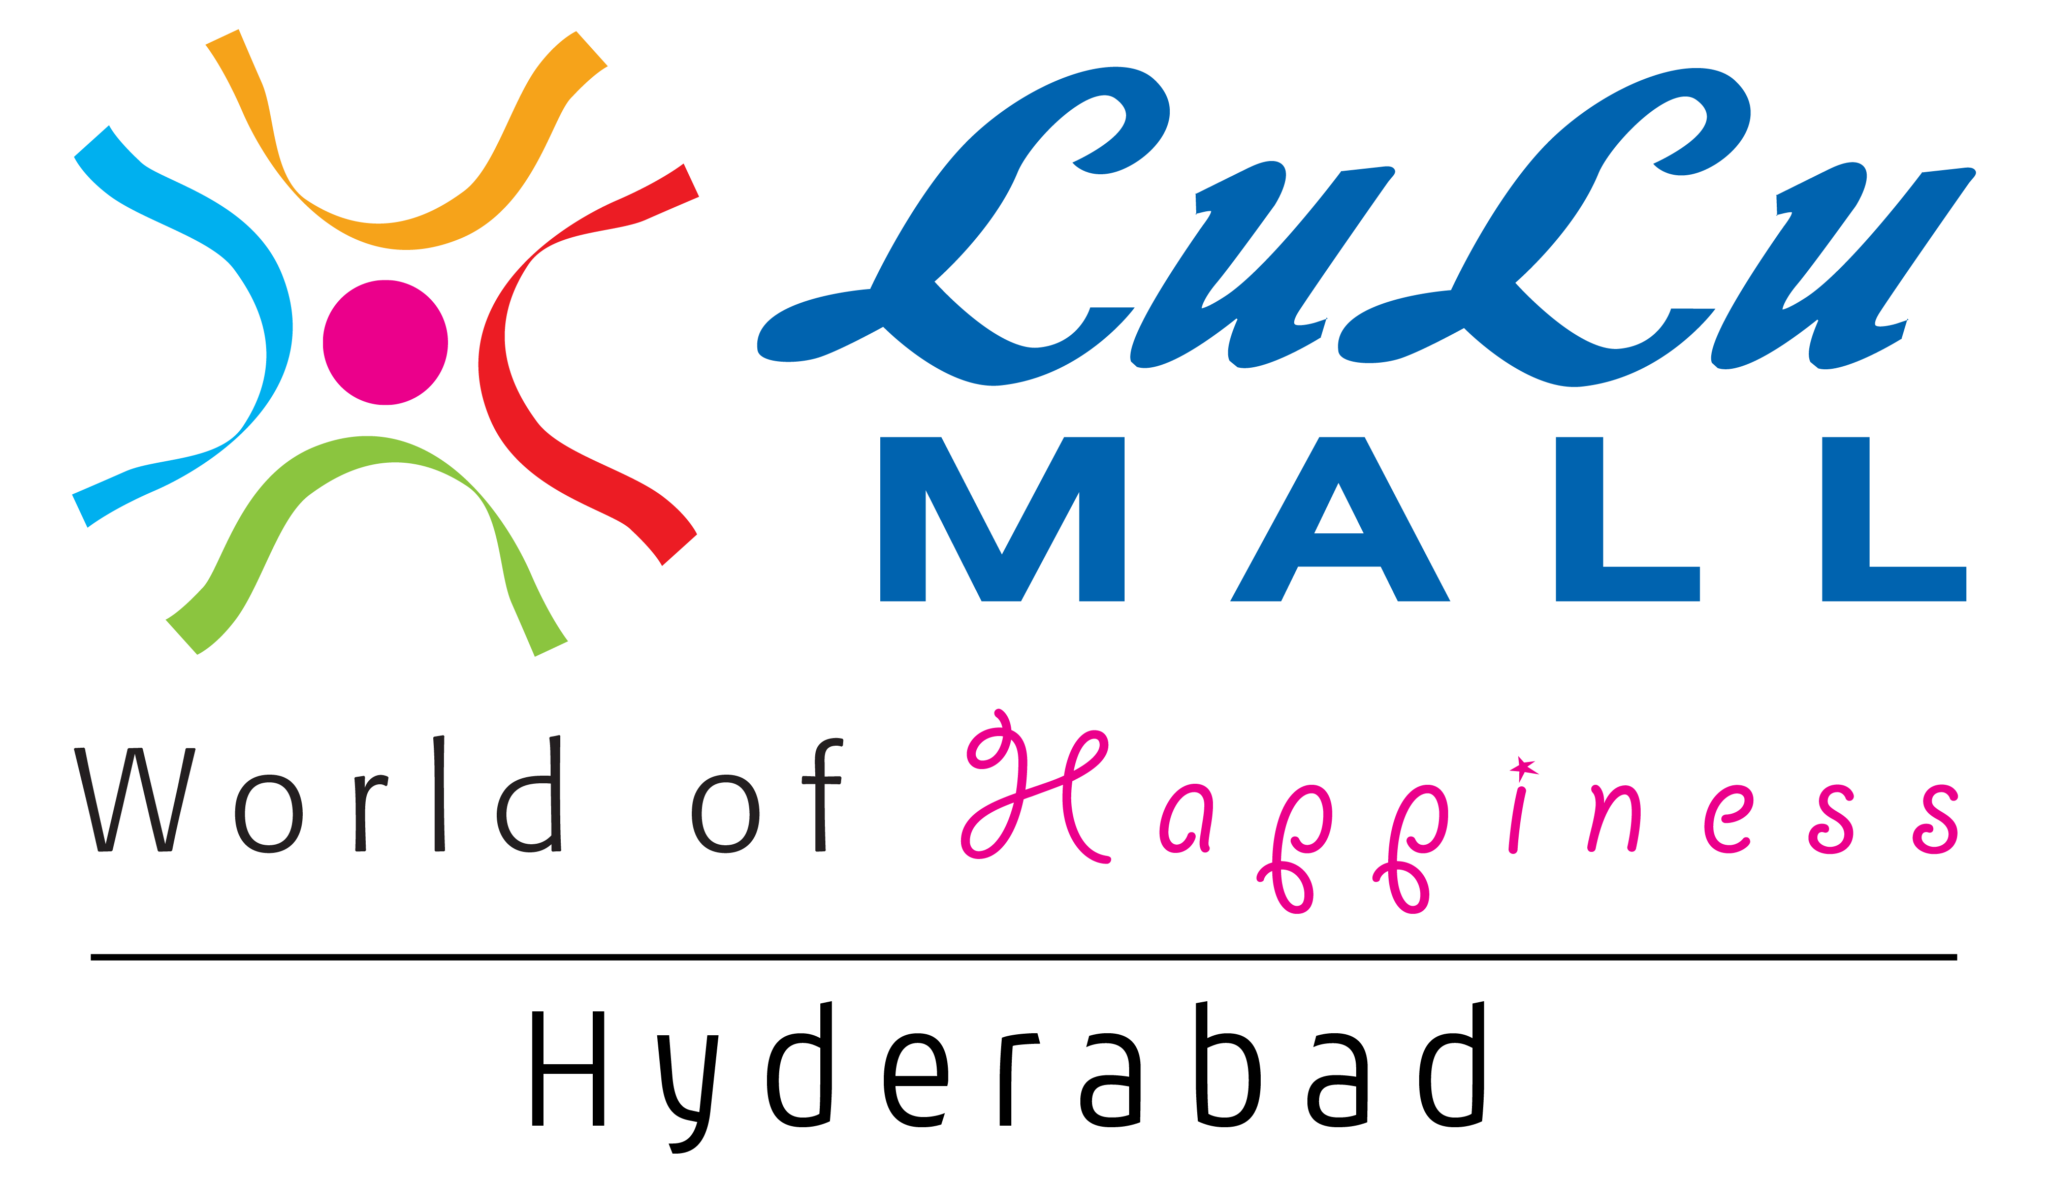 Offers – LuLu Mall